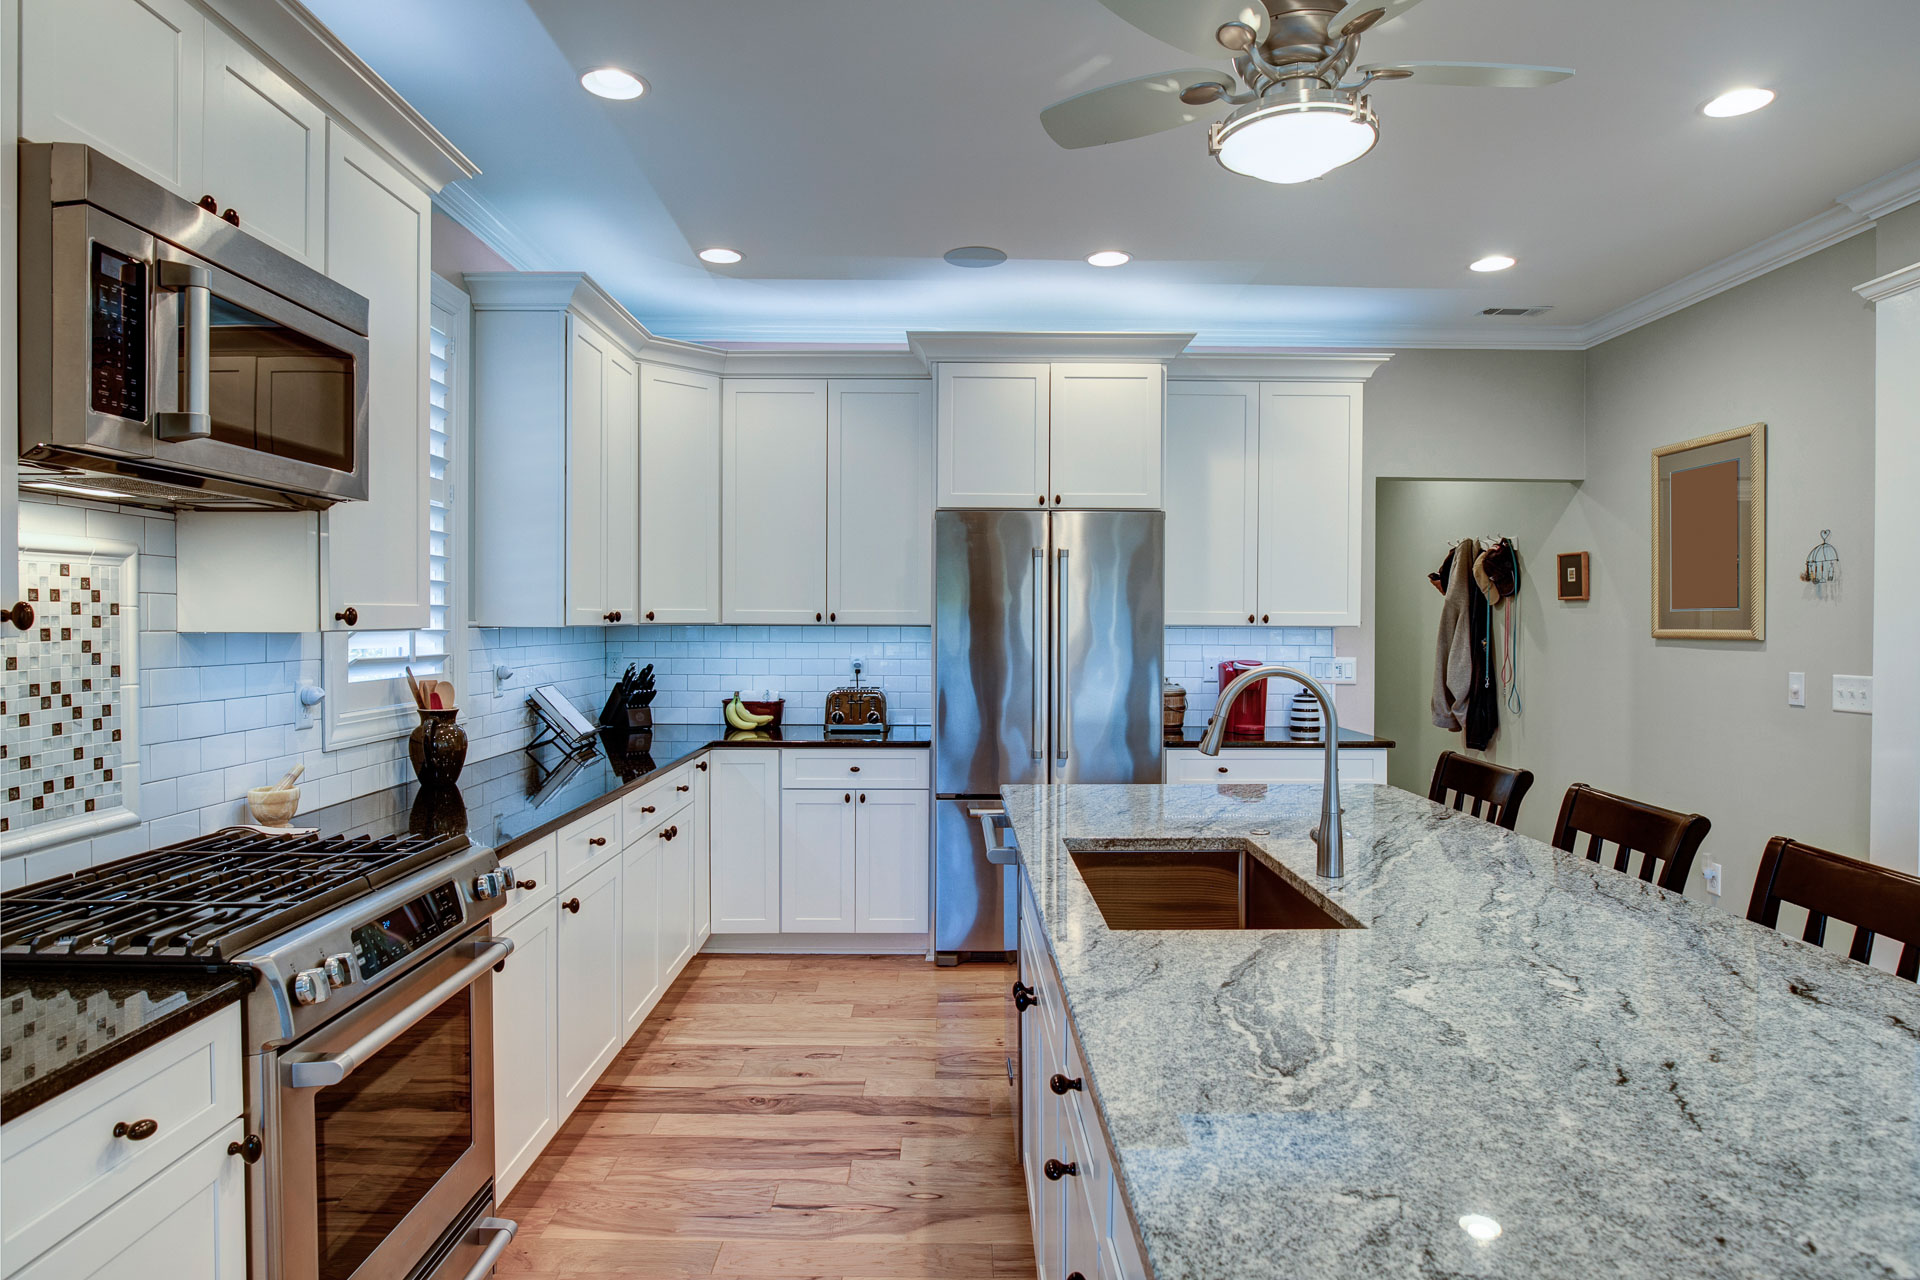 granite kitchen counter